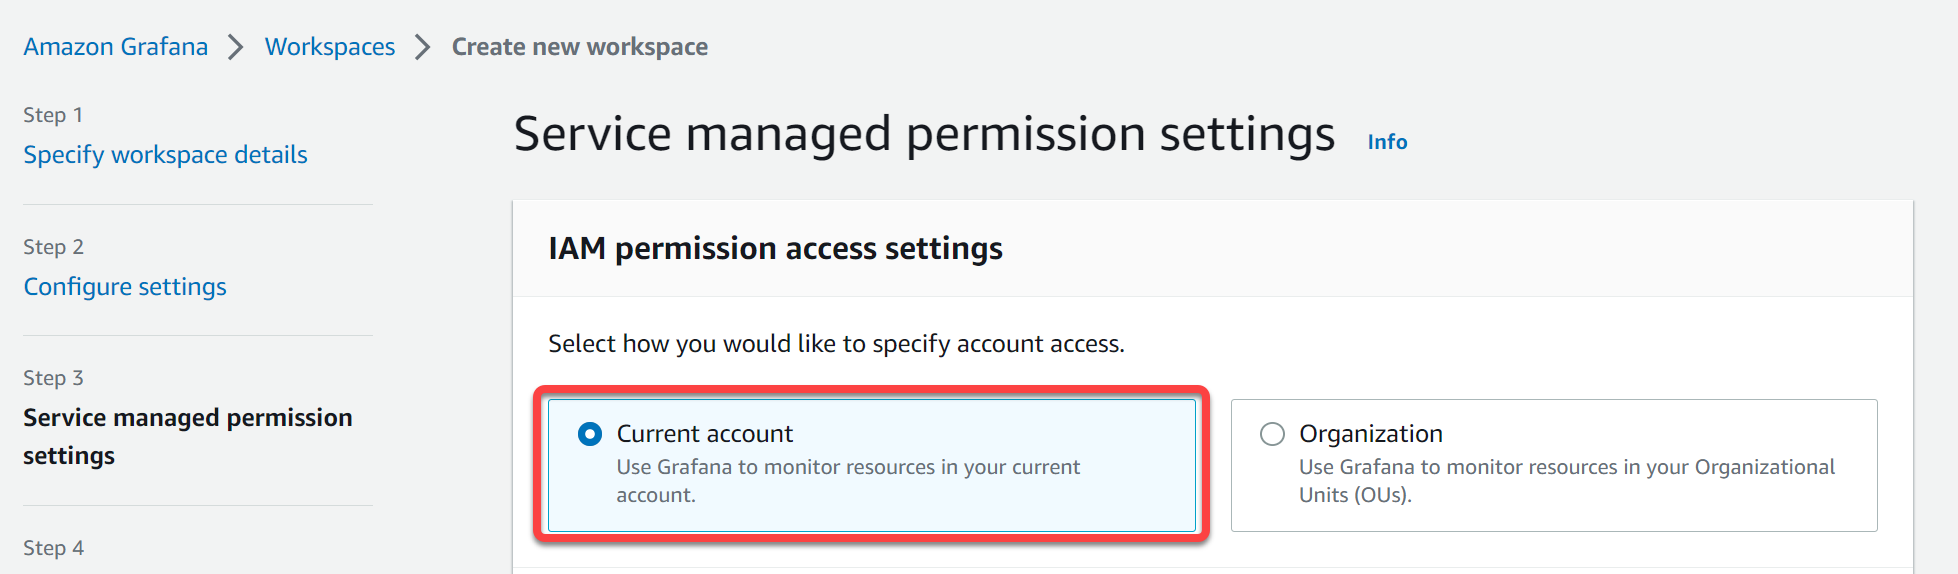 Choosing permission access